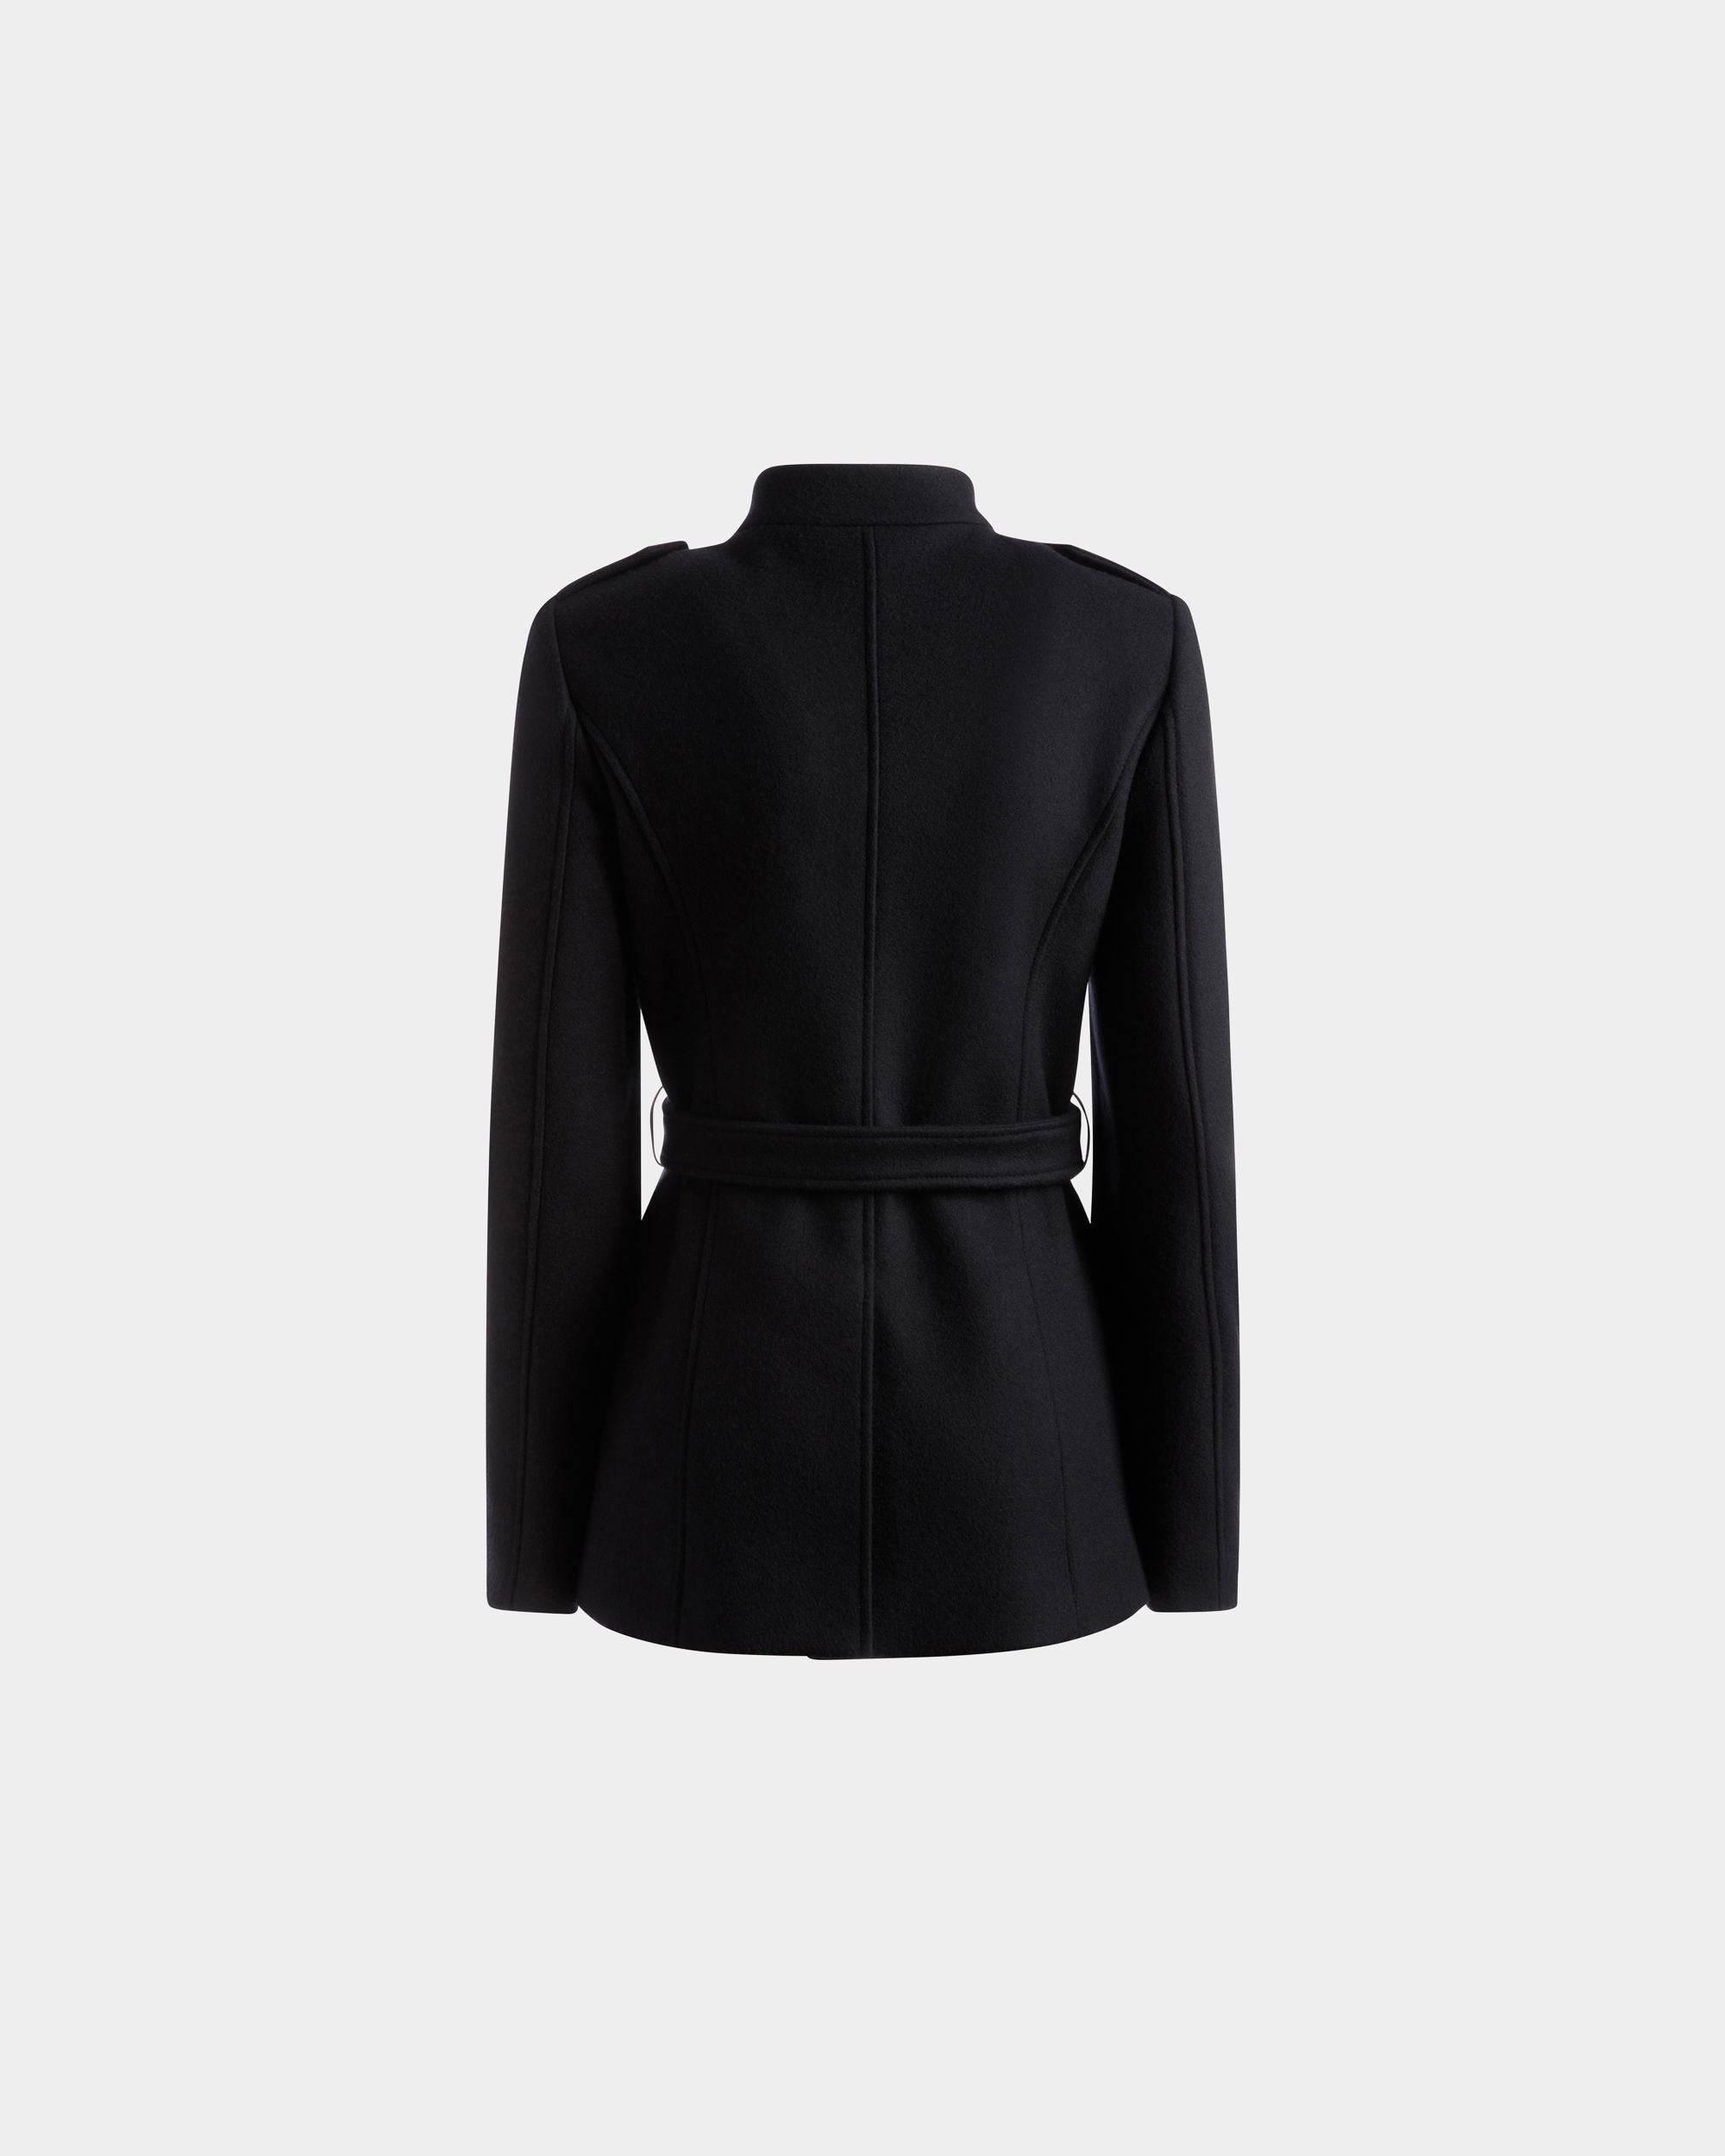 Belted Jacket | Women's Outerwear | Navy Wool | Bally | Still Life Back